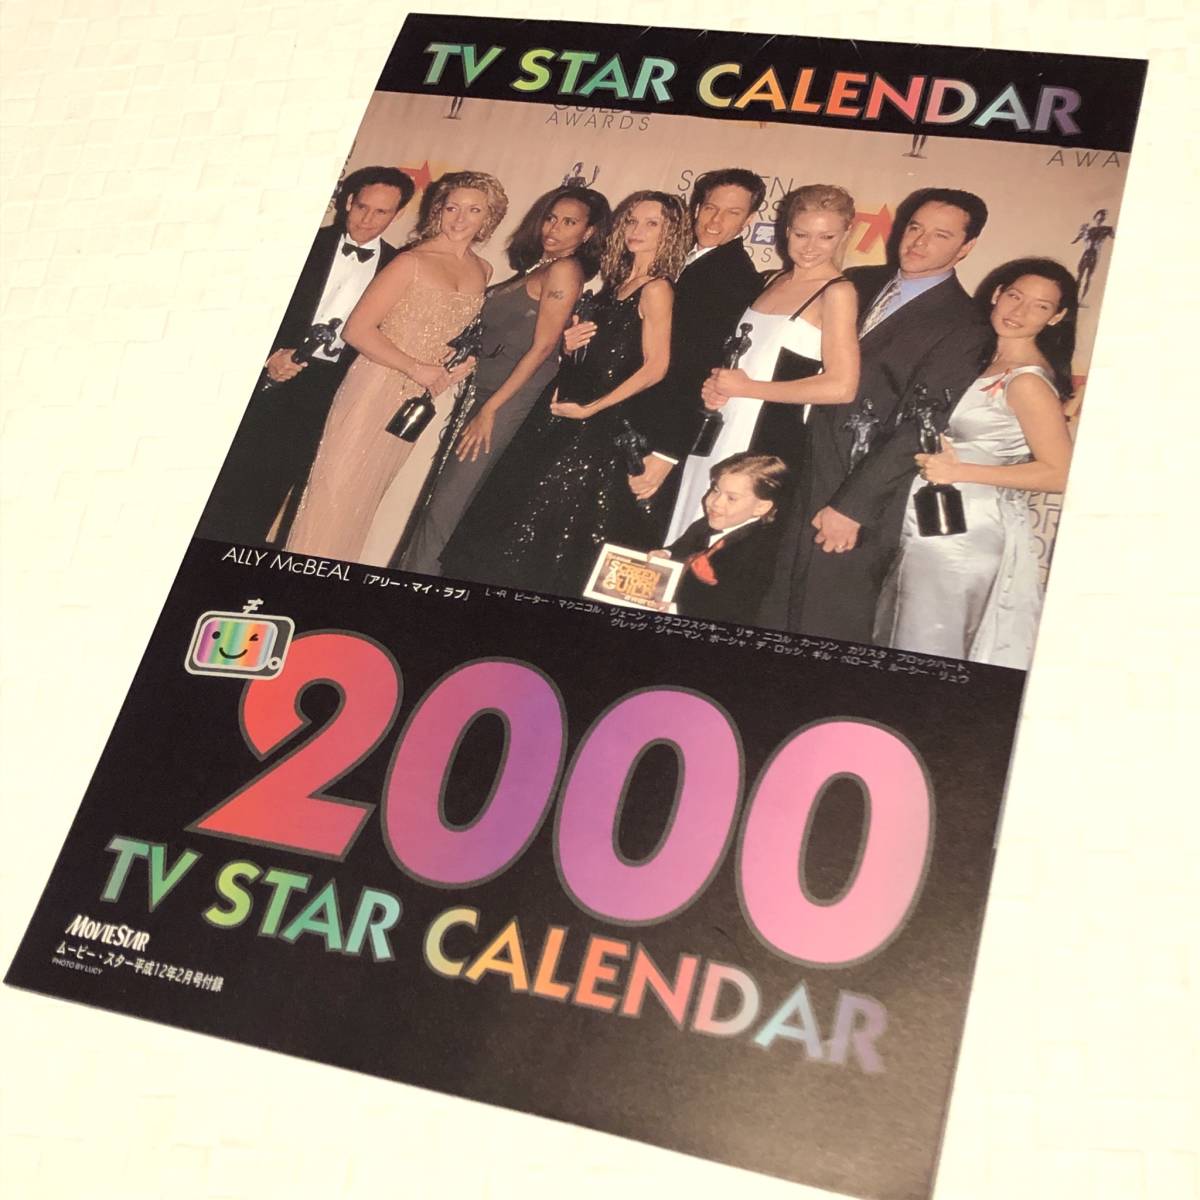 MOVIE STAR Movie Star / специальный дополнение календарь имеется /2000 год 2 месяц Vol.60/blatopito/ Kia n Lee vus/meg Ryan /nata Lee порт man 